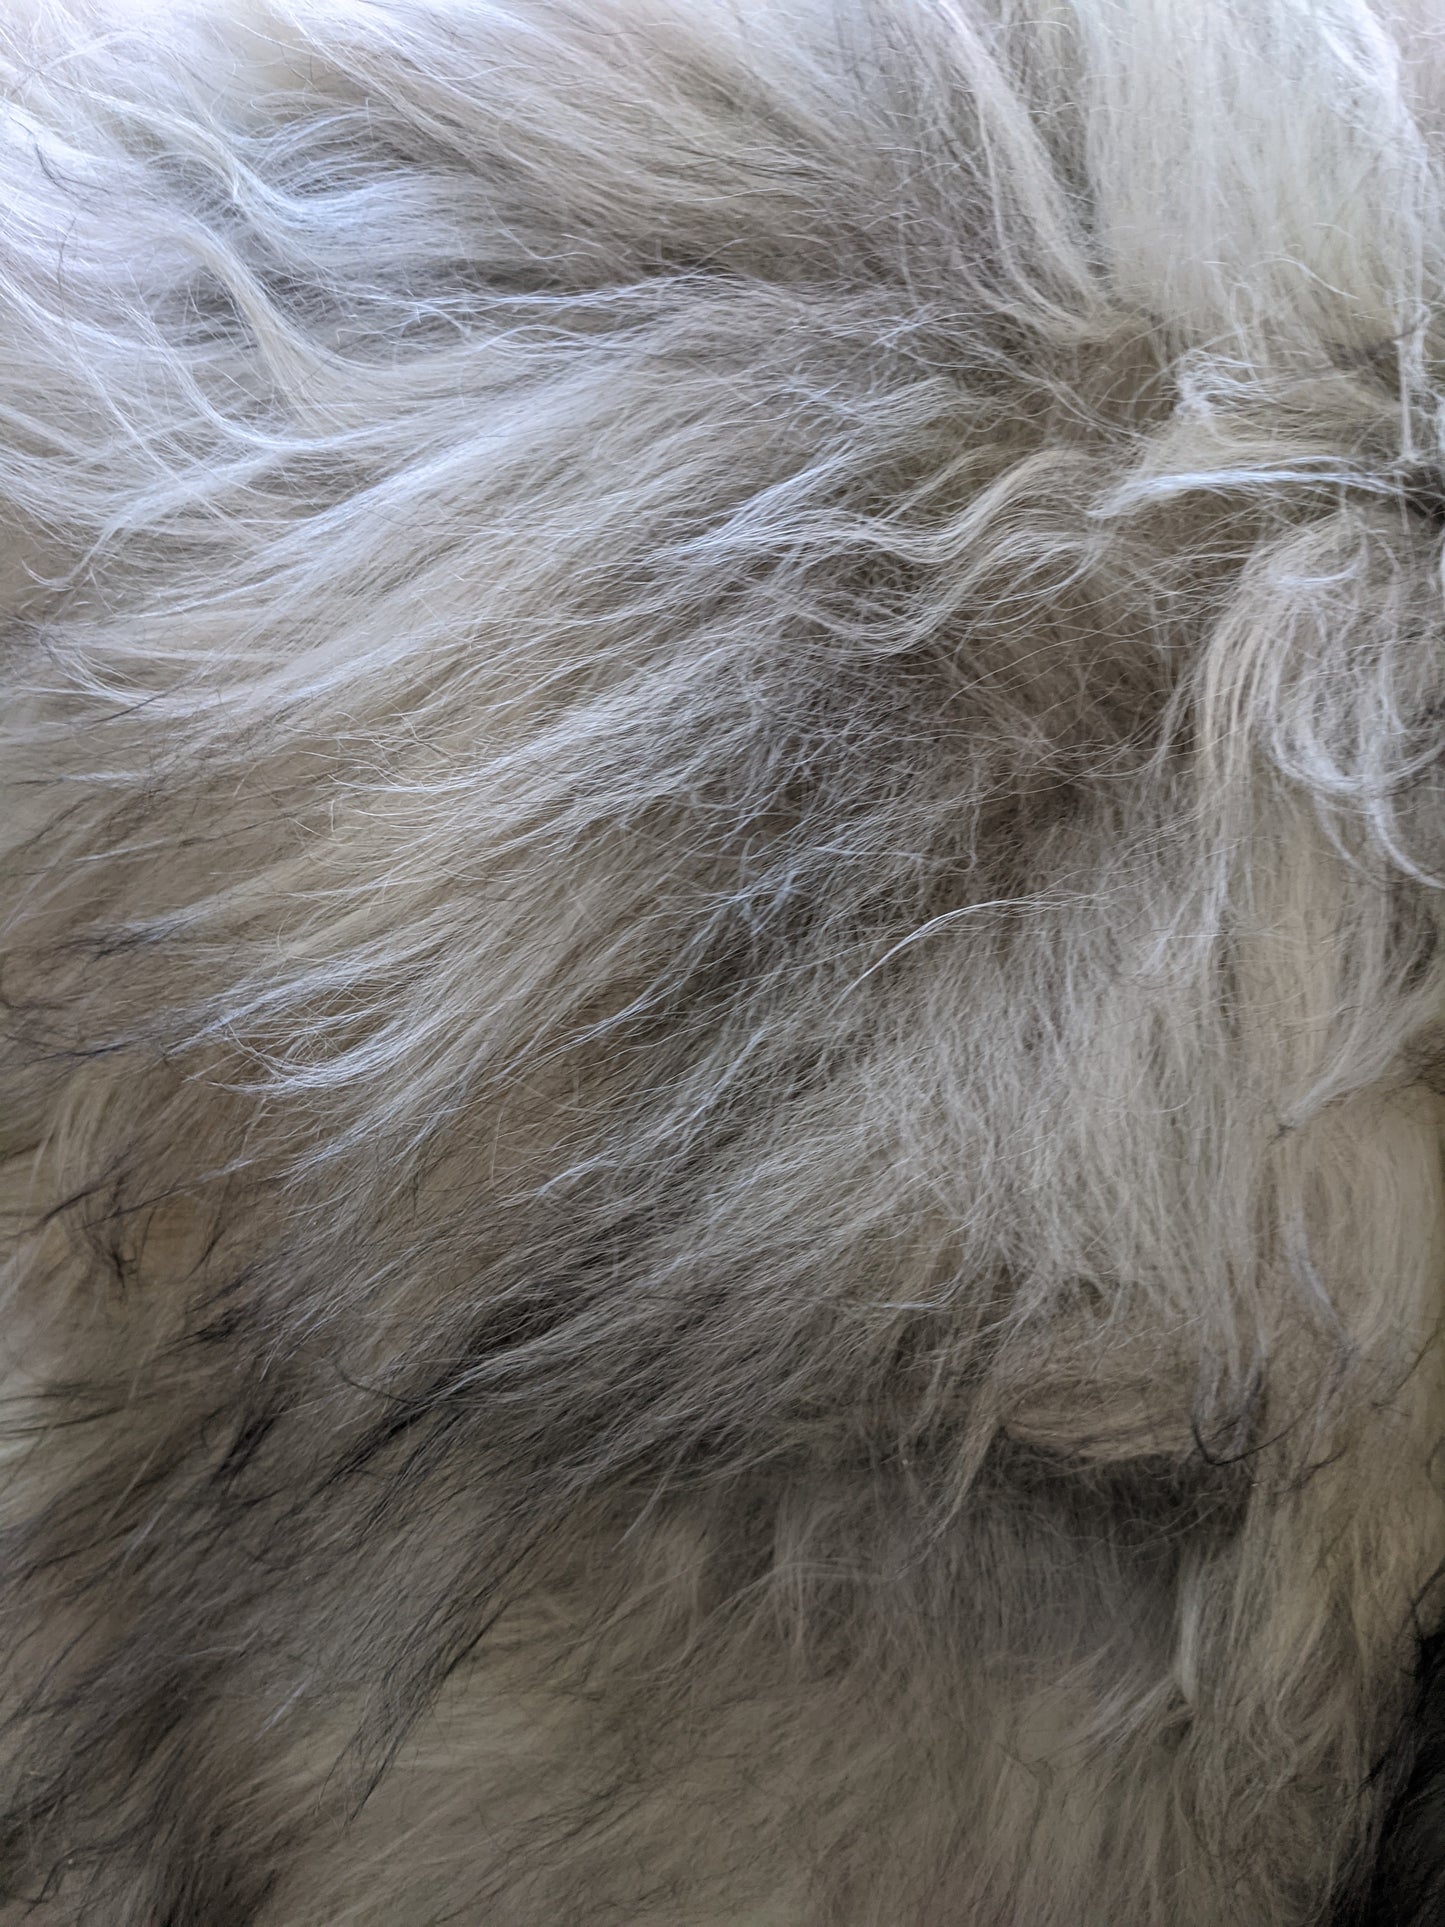 Close up of fur of Grey Sheepskin Rug - showing 6 inch length